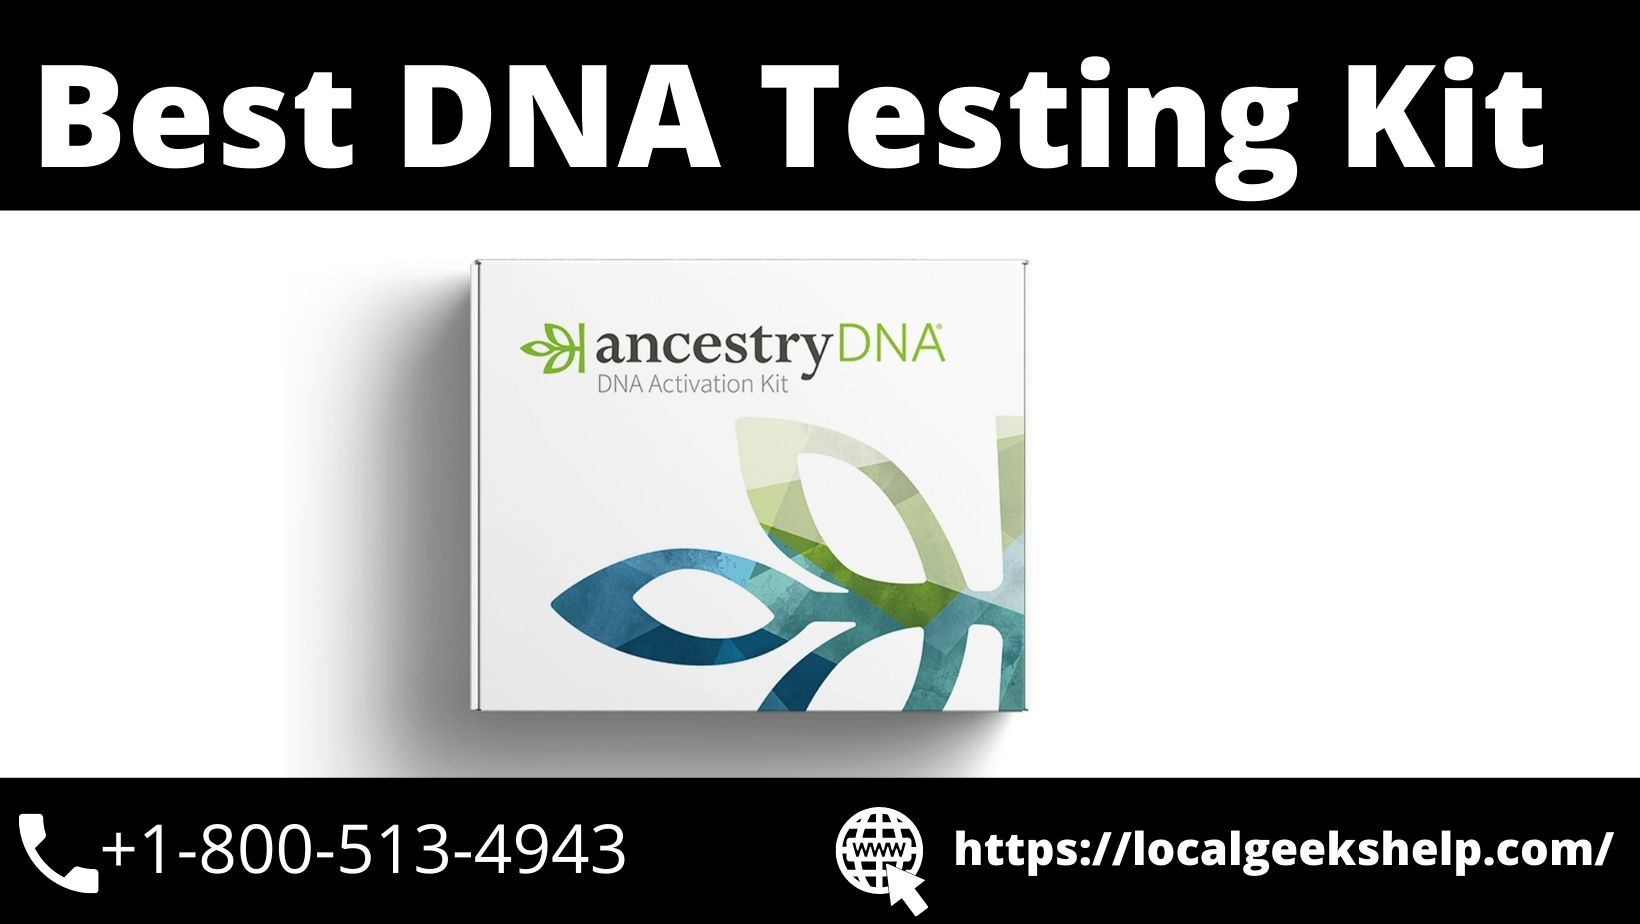 The 3 Best DNA Testing Kit: Ancestry DNA vs 23ANDME vs Family Tree DNA - Live technician